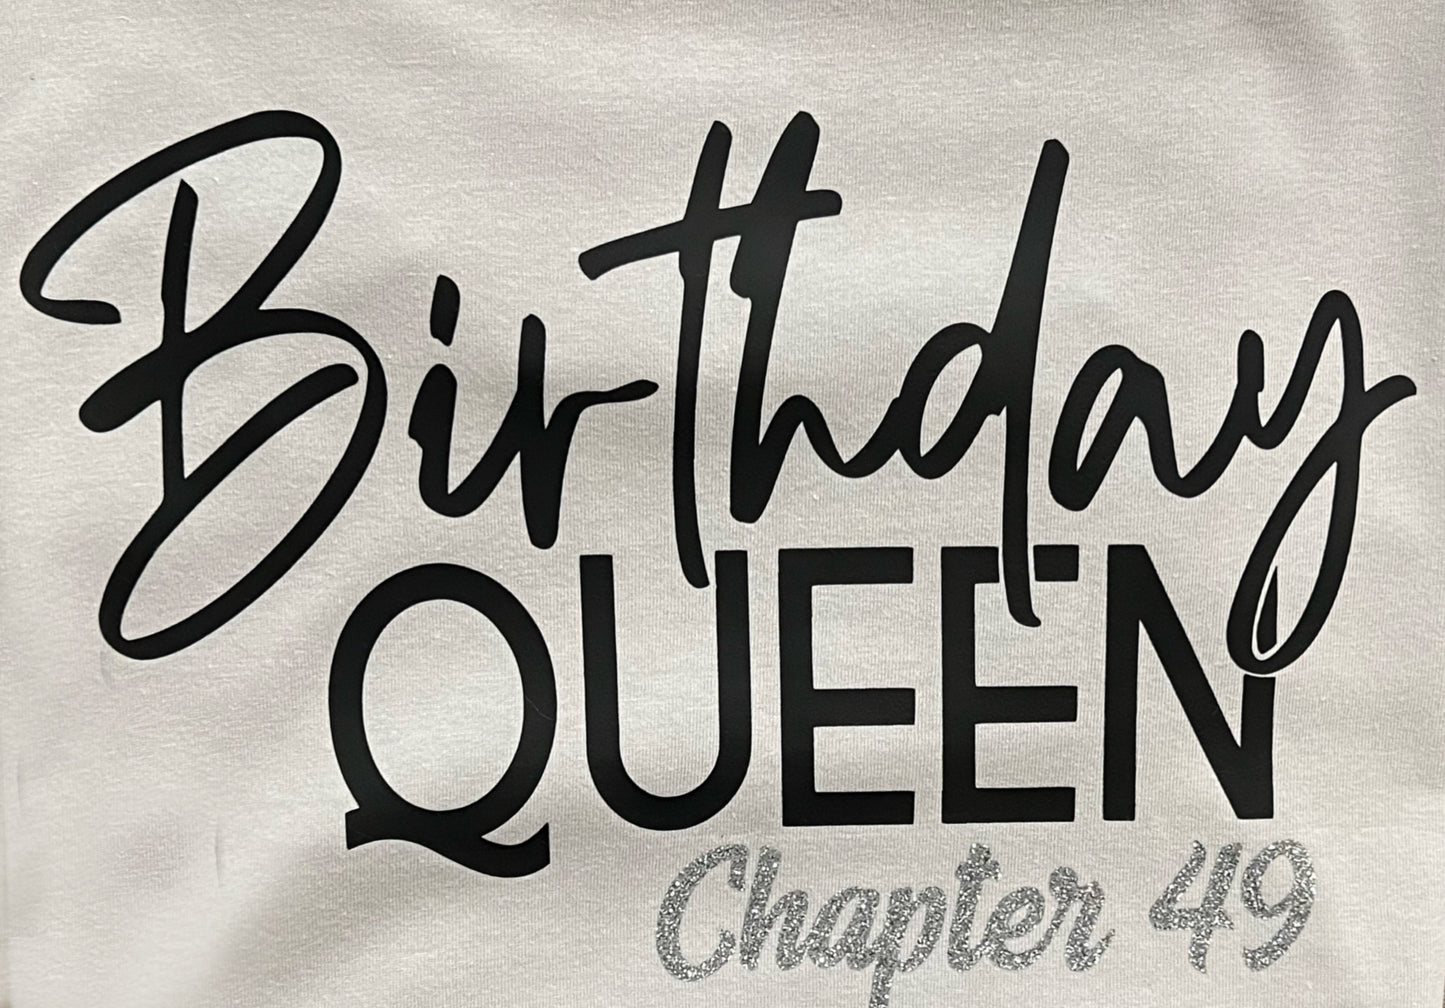 Birthday Queen T-Shirt